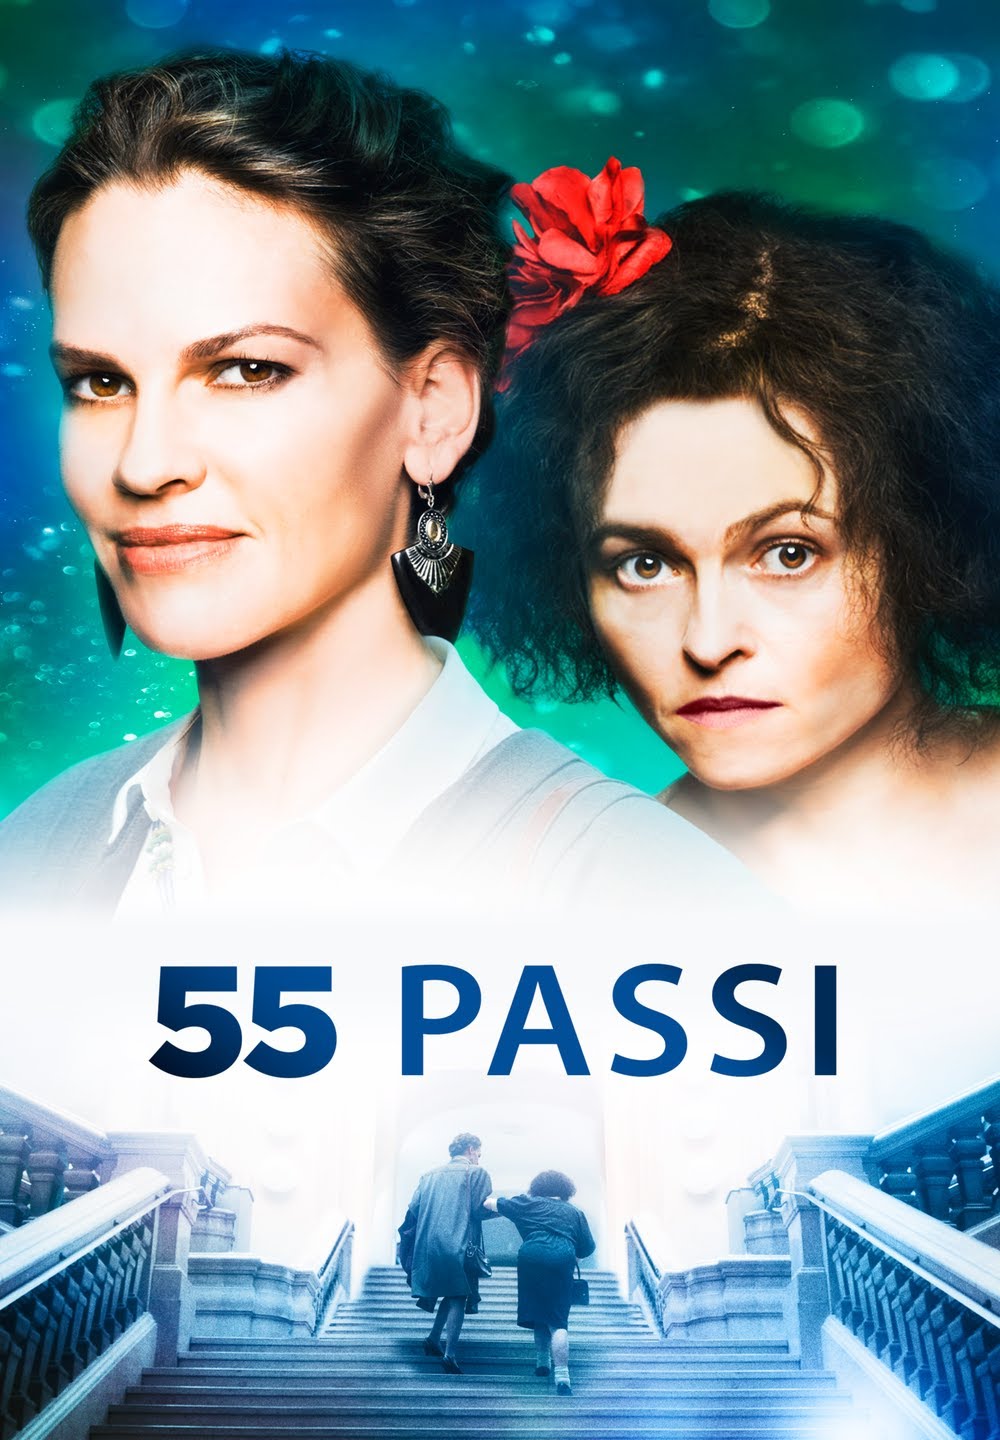 55 passi [HD] (2018)